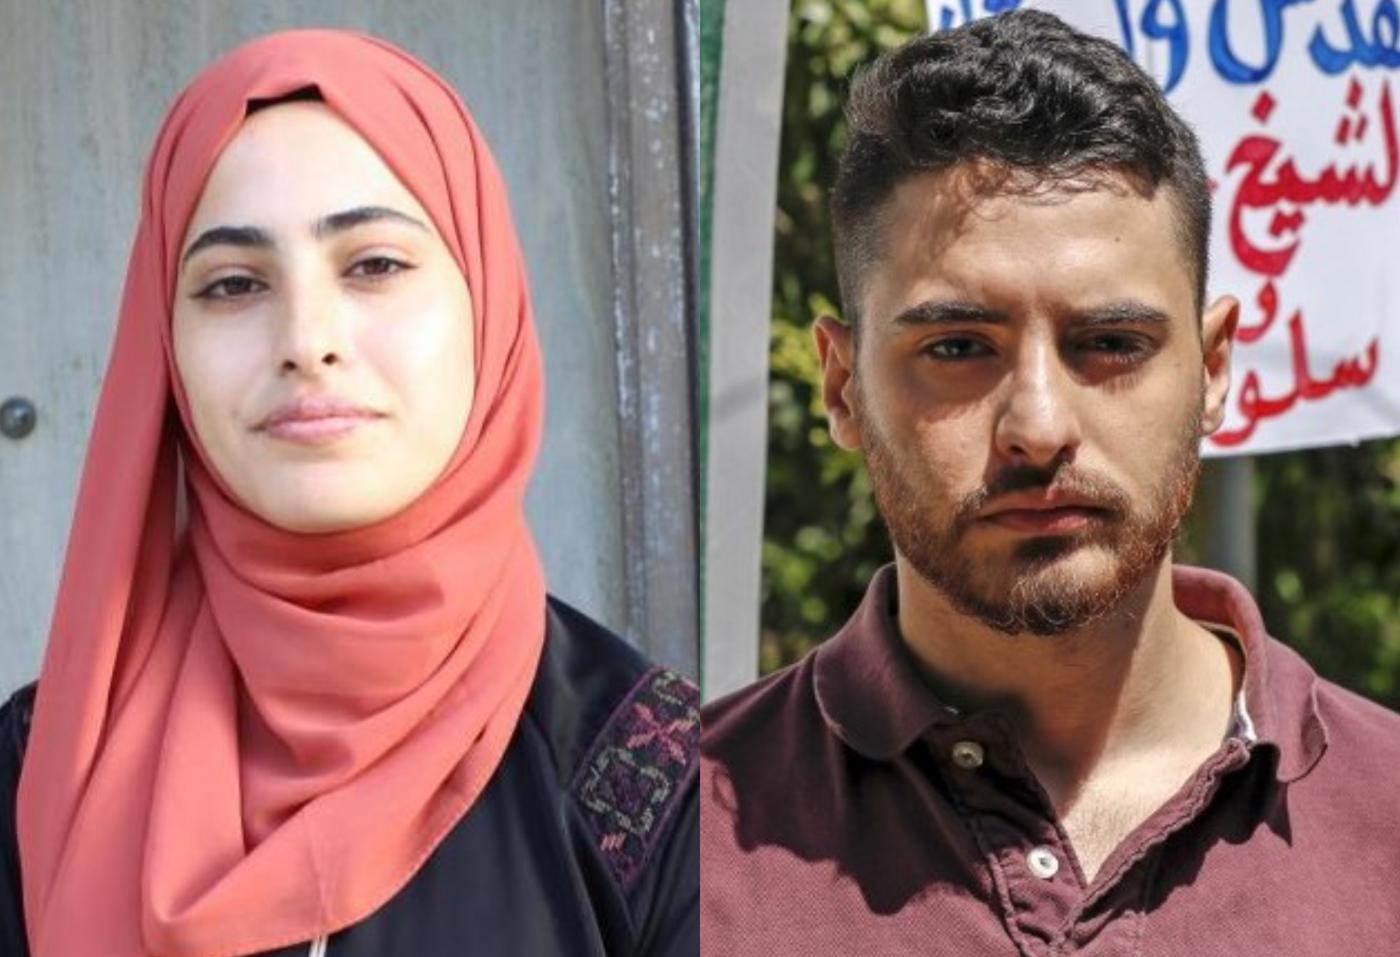 Israeli troops detain Palestinian activist, her brother at Jerusalem home